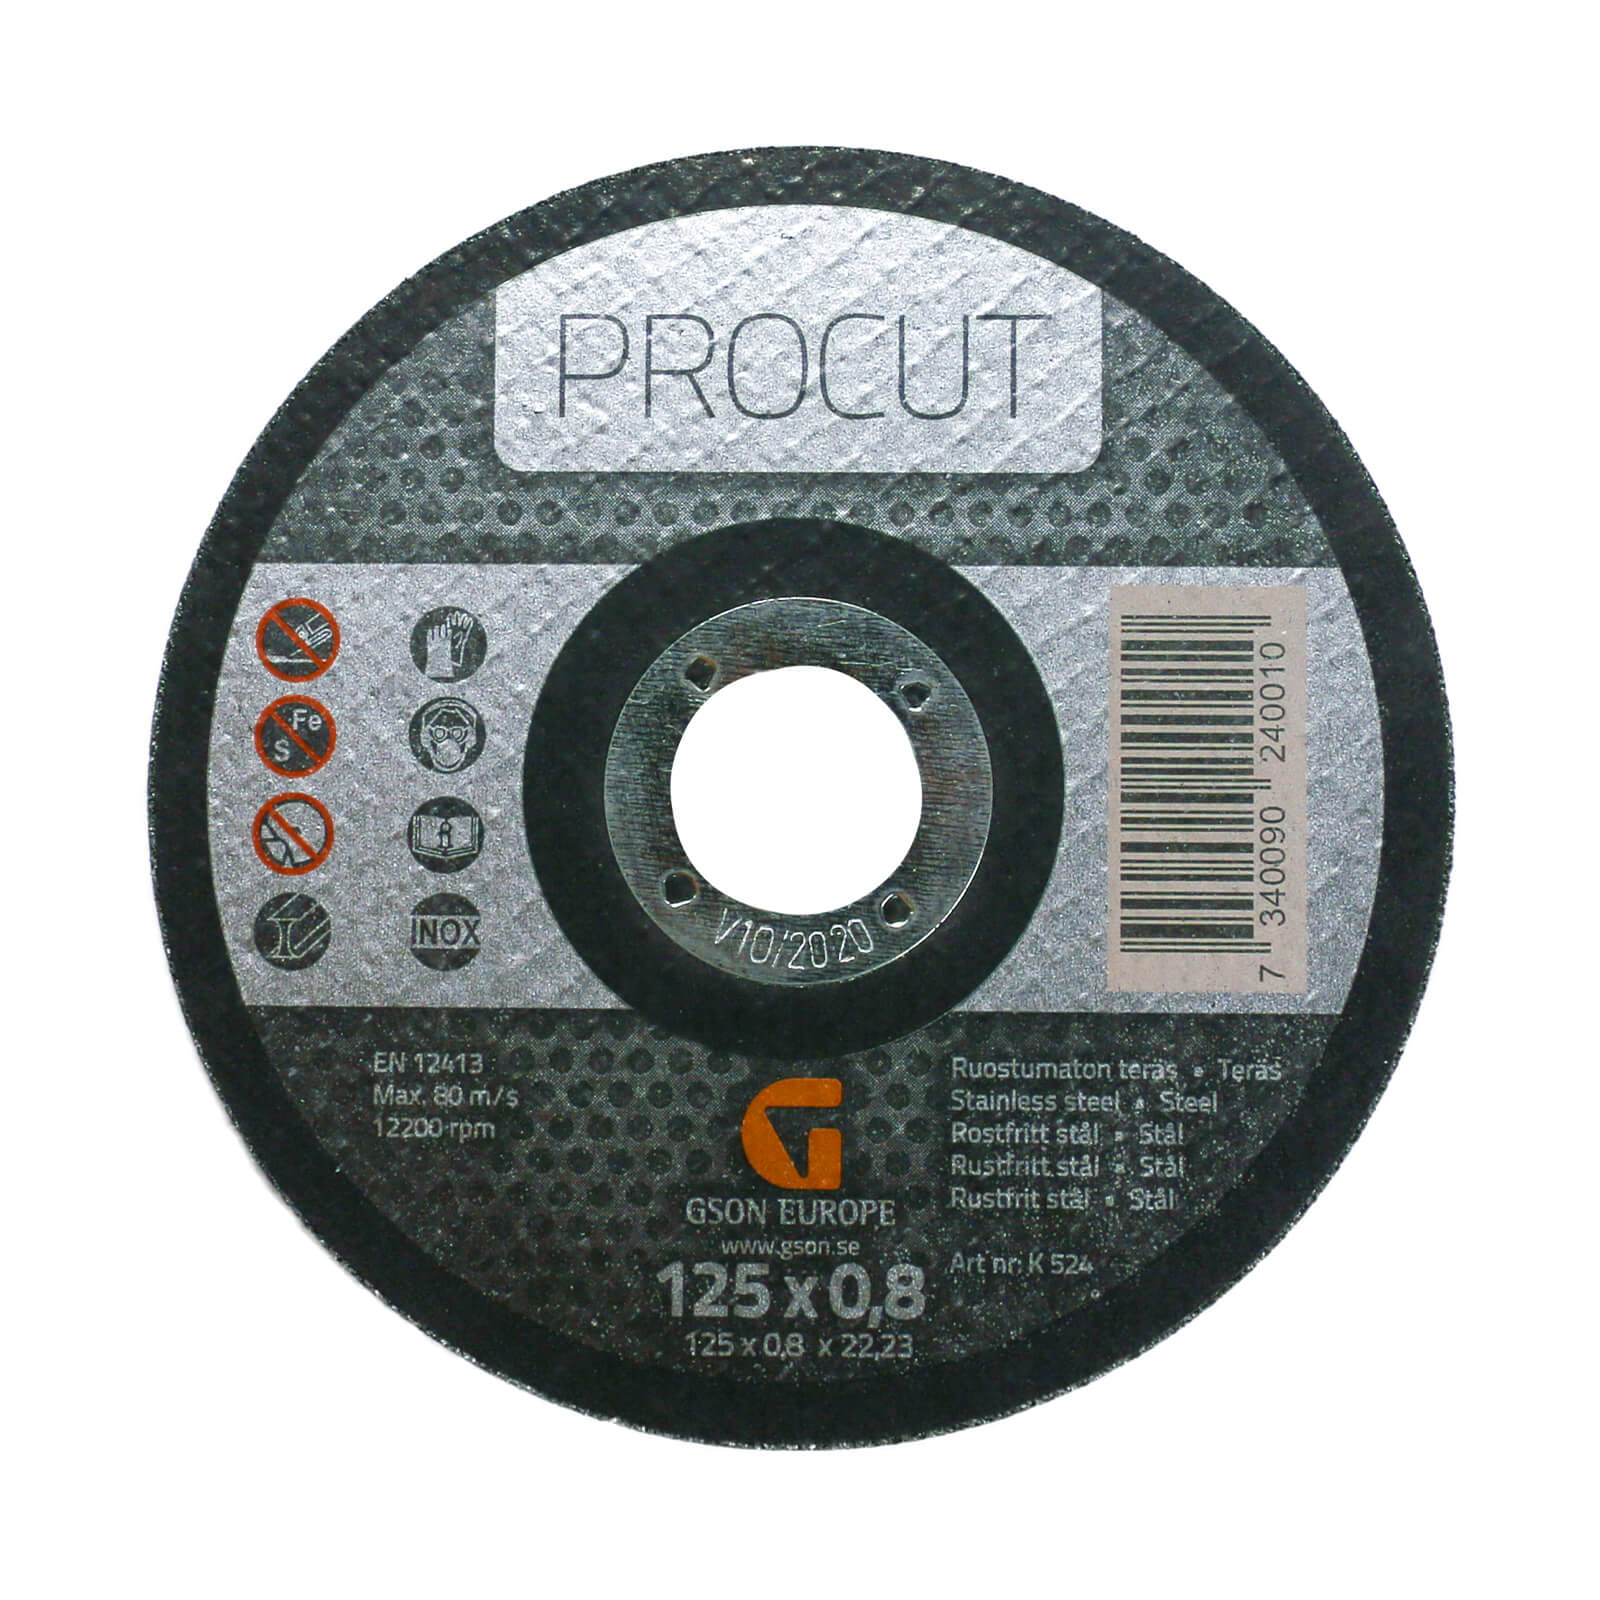 Procut Cutting disc 125x0.8x22.23 mm (50pcs/box)